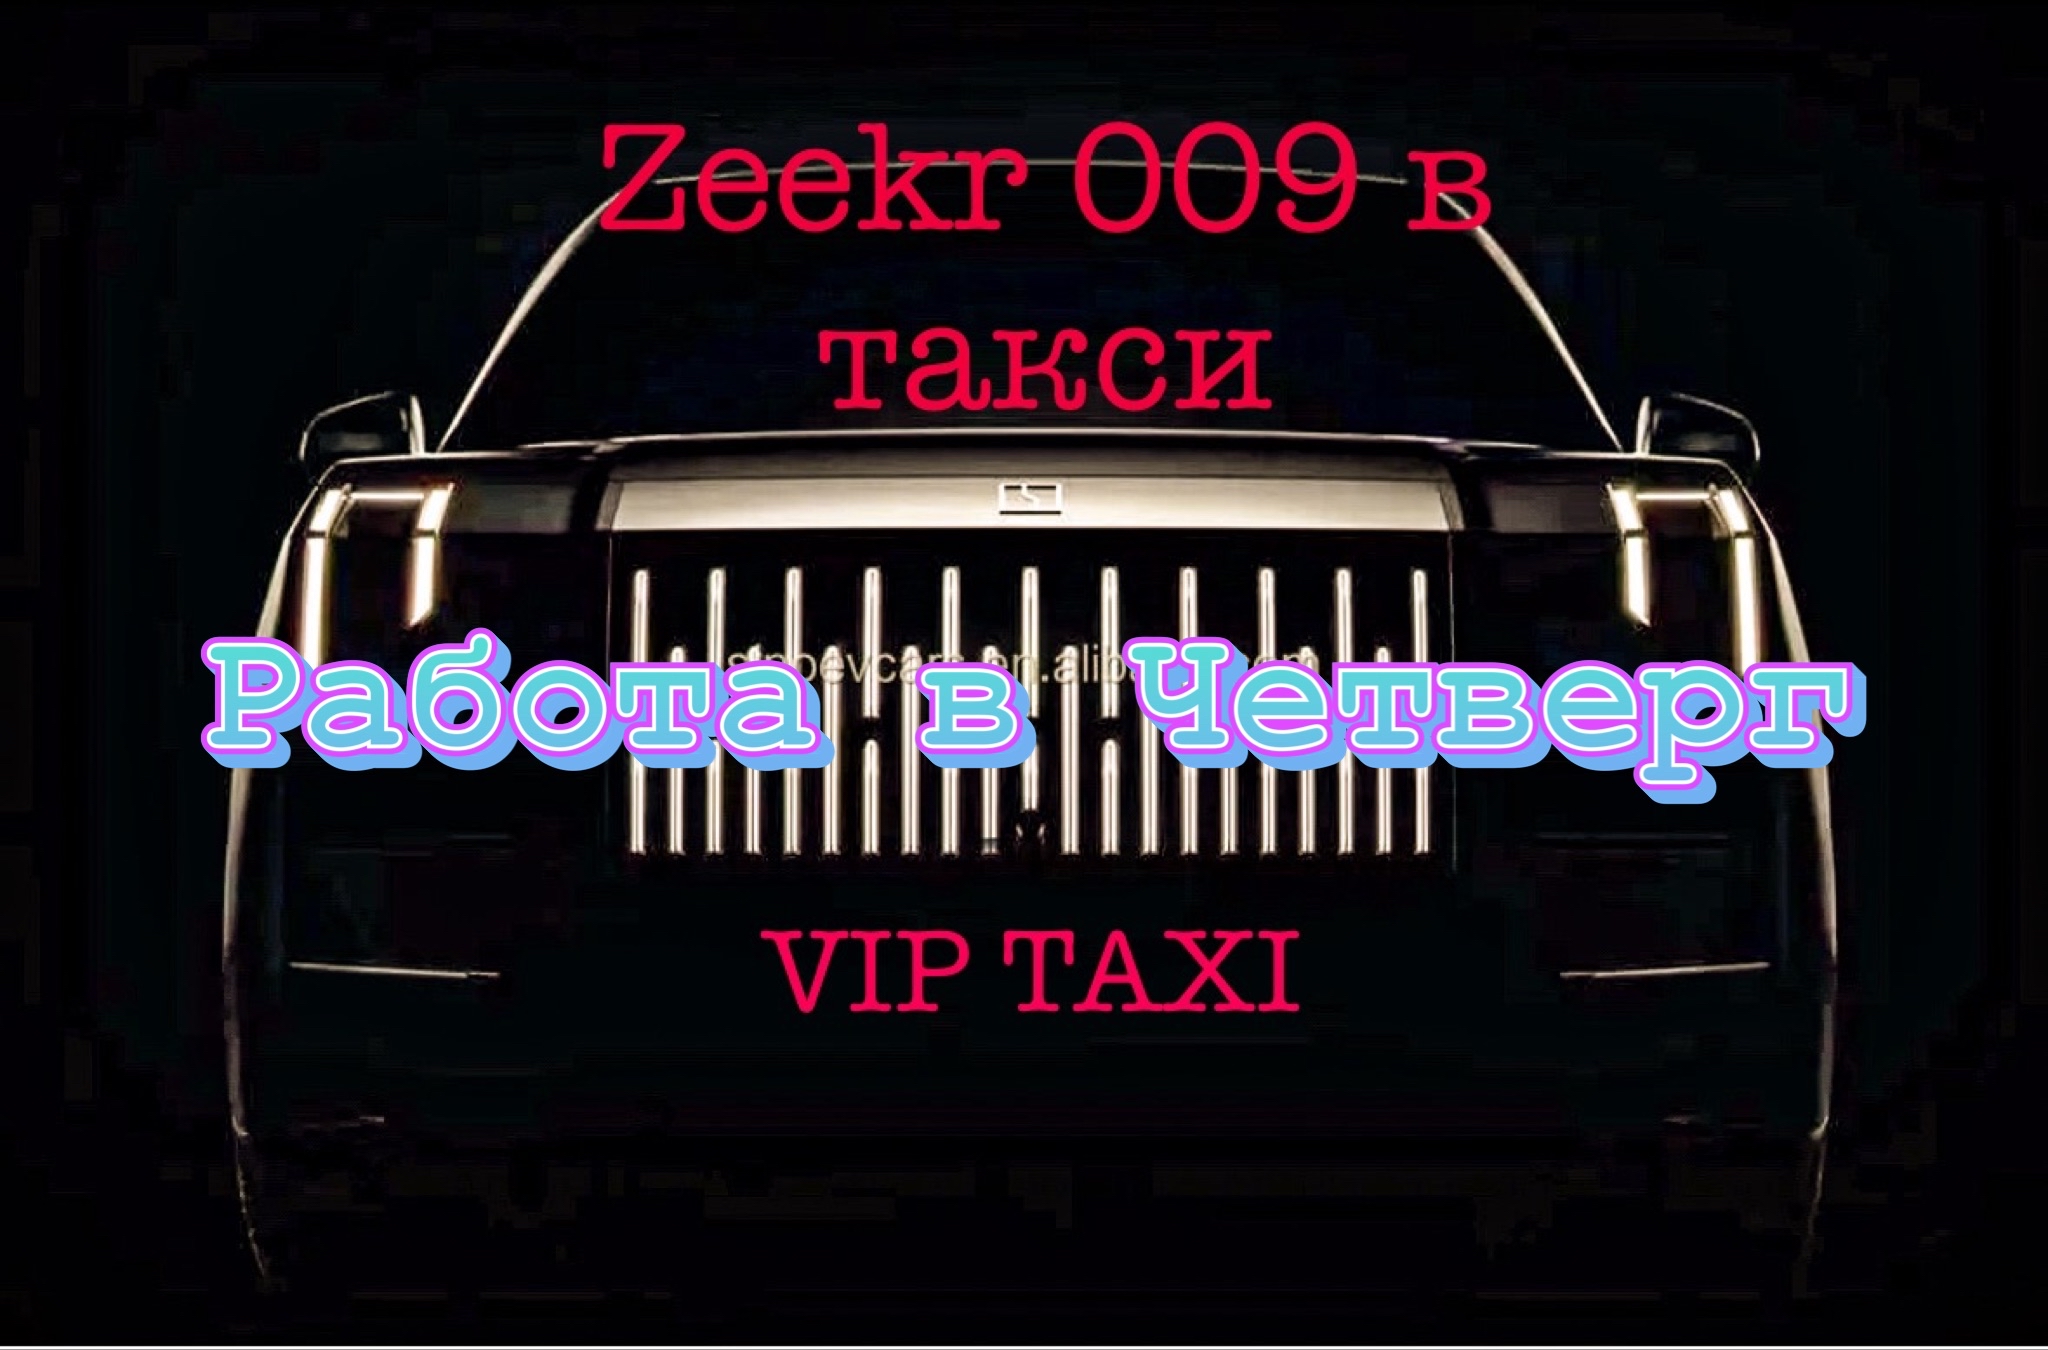 Четверг vip такси /таксую на zeekr009/elite taxi/яндекс такси#elite #taxi #vip #zeekr #yandextaxi